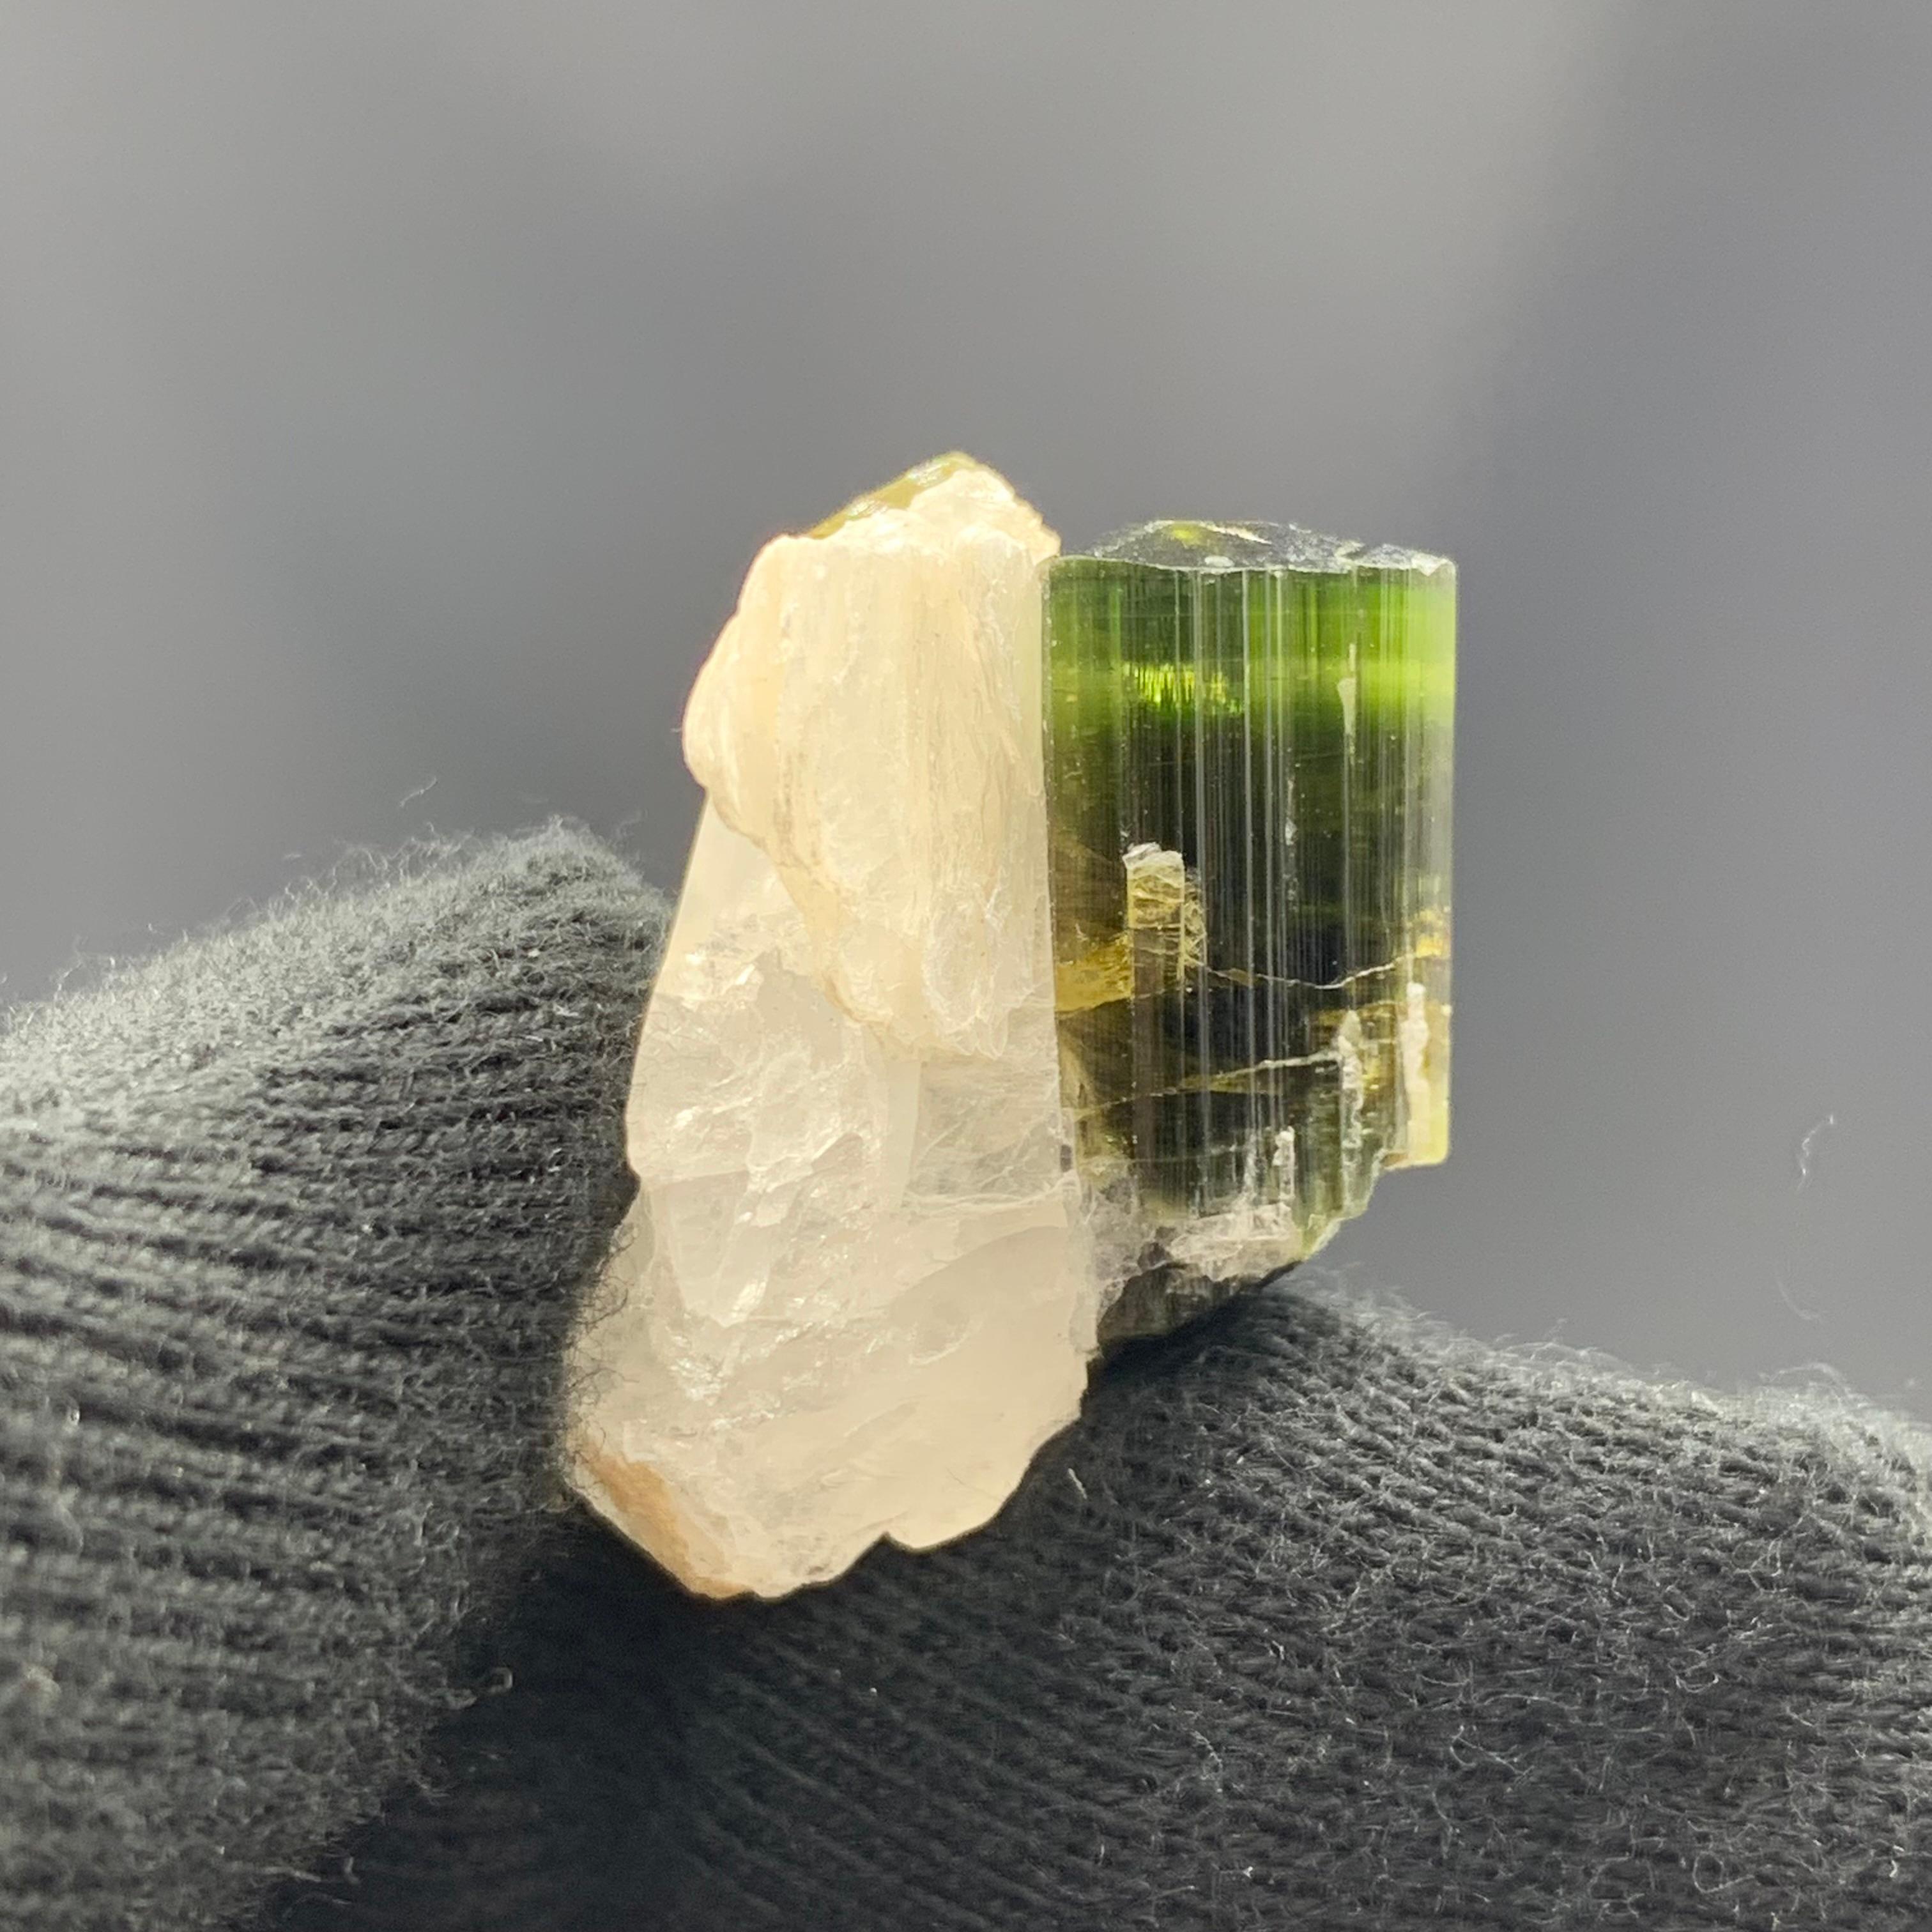 39.95 Carat Pretty Tourmaline with Albite Specimen From Skardu, Pakistan 

Weight: 39.95 Carat 
Dimension: 2.5 x 1.6 x 2.2 Cm
Origin: Stak Nala Valley, Skardu, Pakistan 

Tourmaline is a crystalline silicate mineral group in which boron is